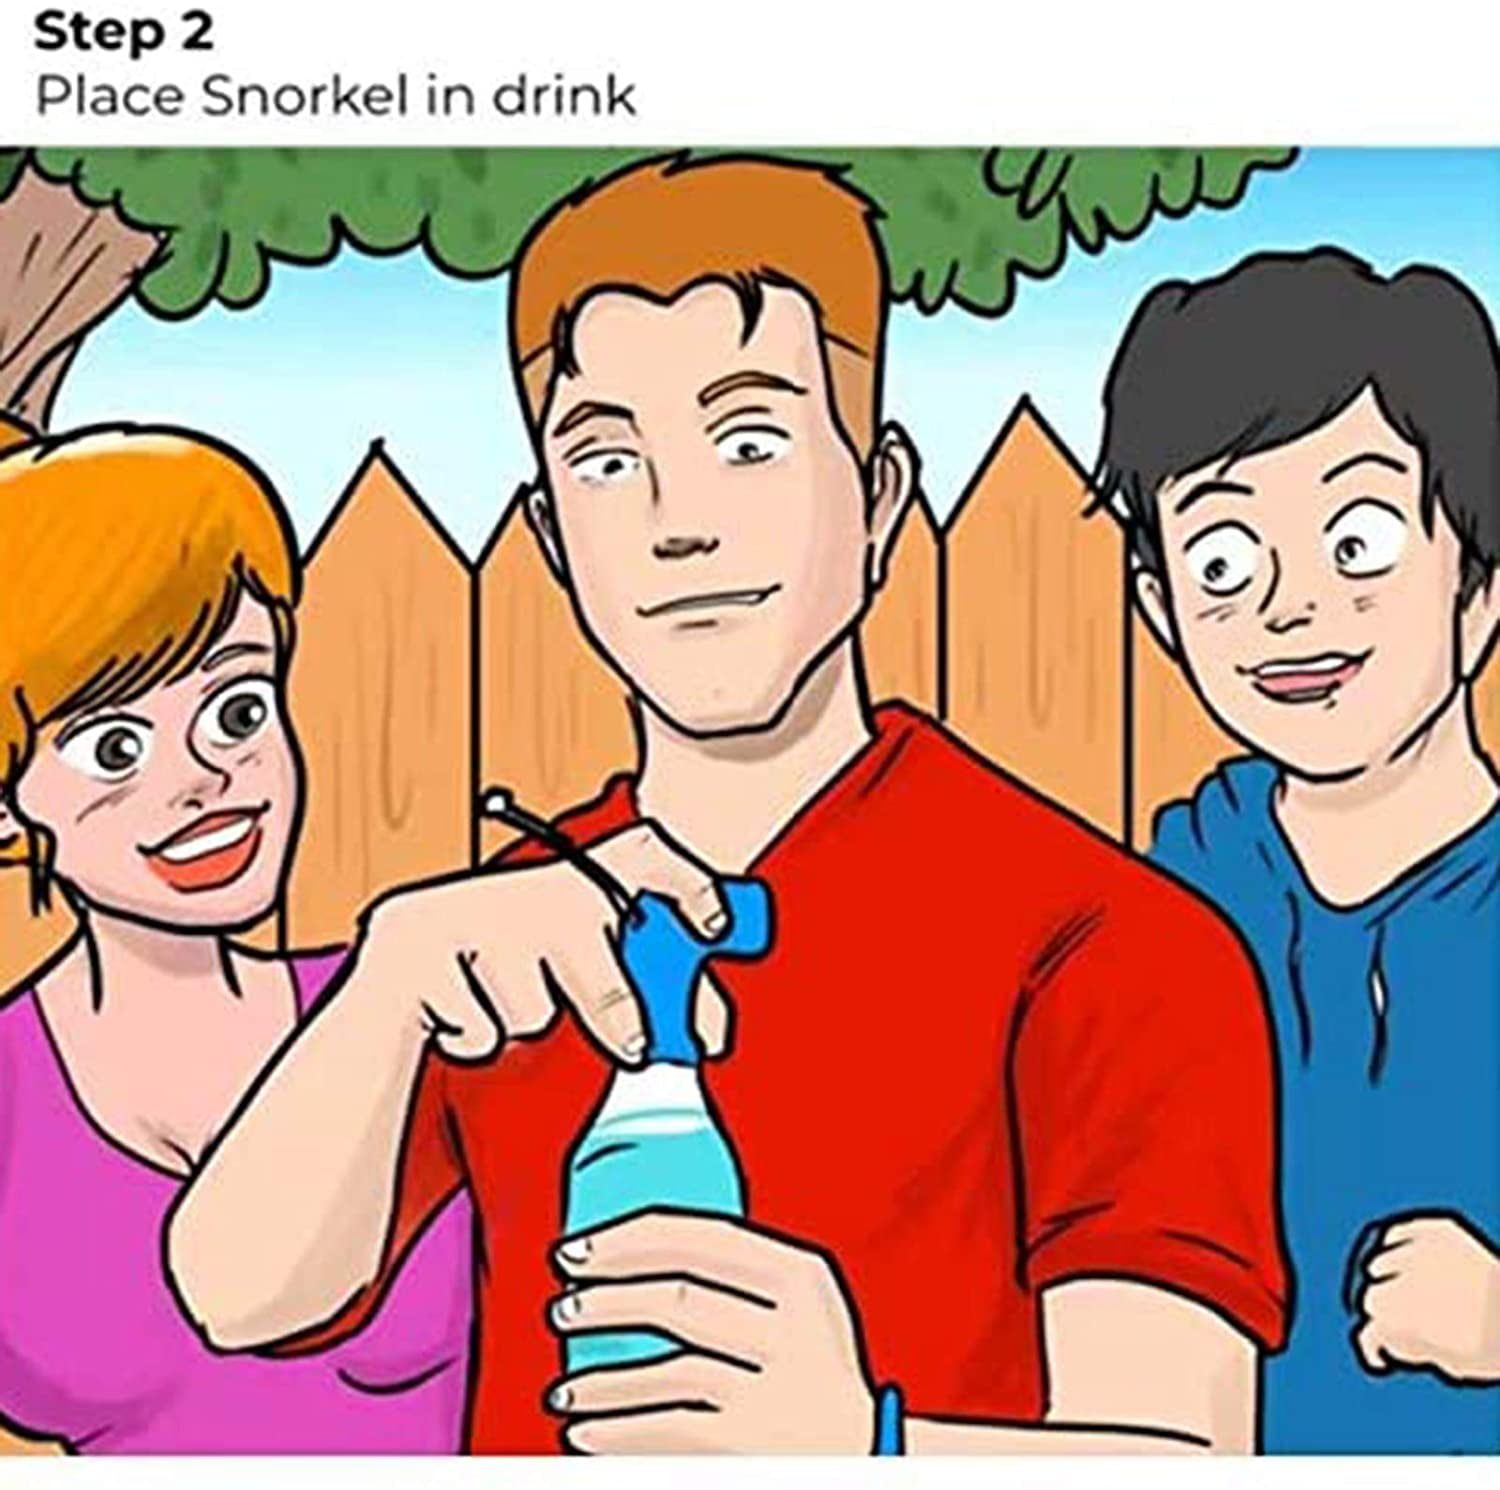 1XBeer Snorkel Beer Bong Bucks Hens House Party Games Funnel Drinking Snorkel 